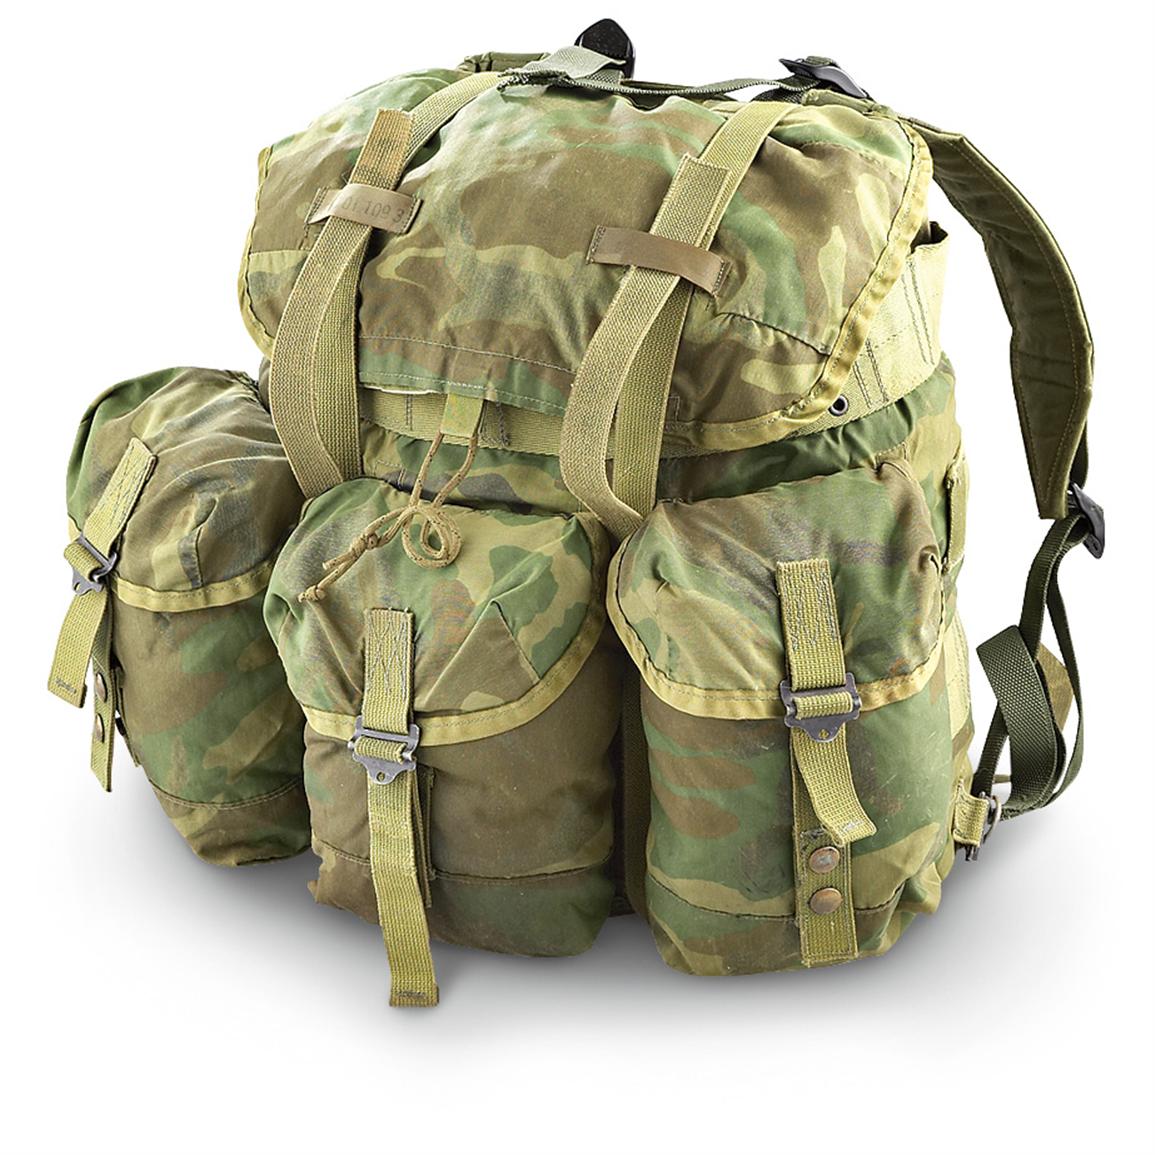 Used U.S. Mil. Medium A.L.I.C.E. Pack, Woodland Camo - 154982, Rucksacks & Backpacks at ...